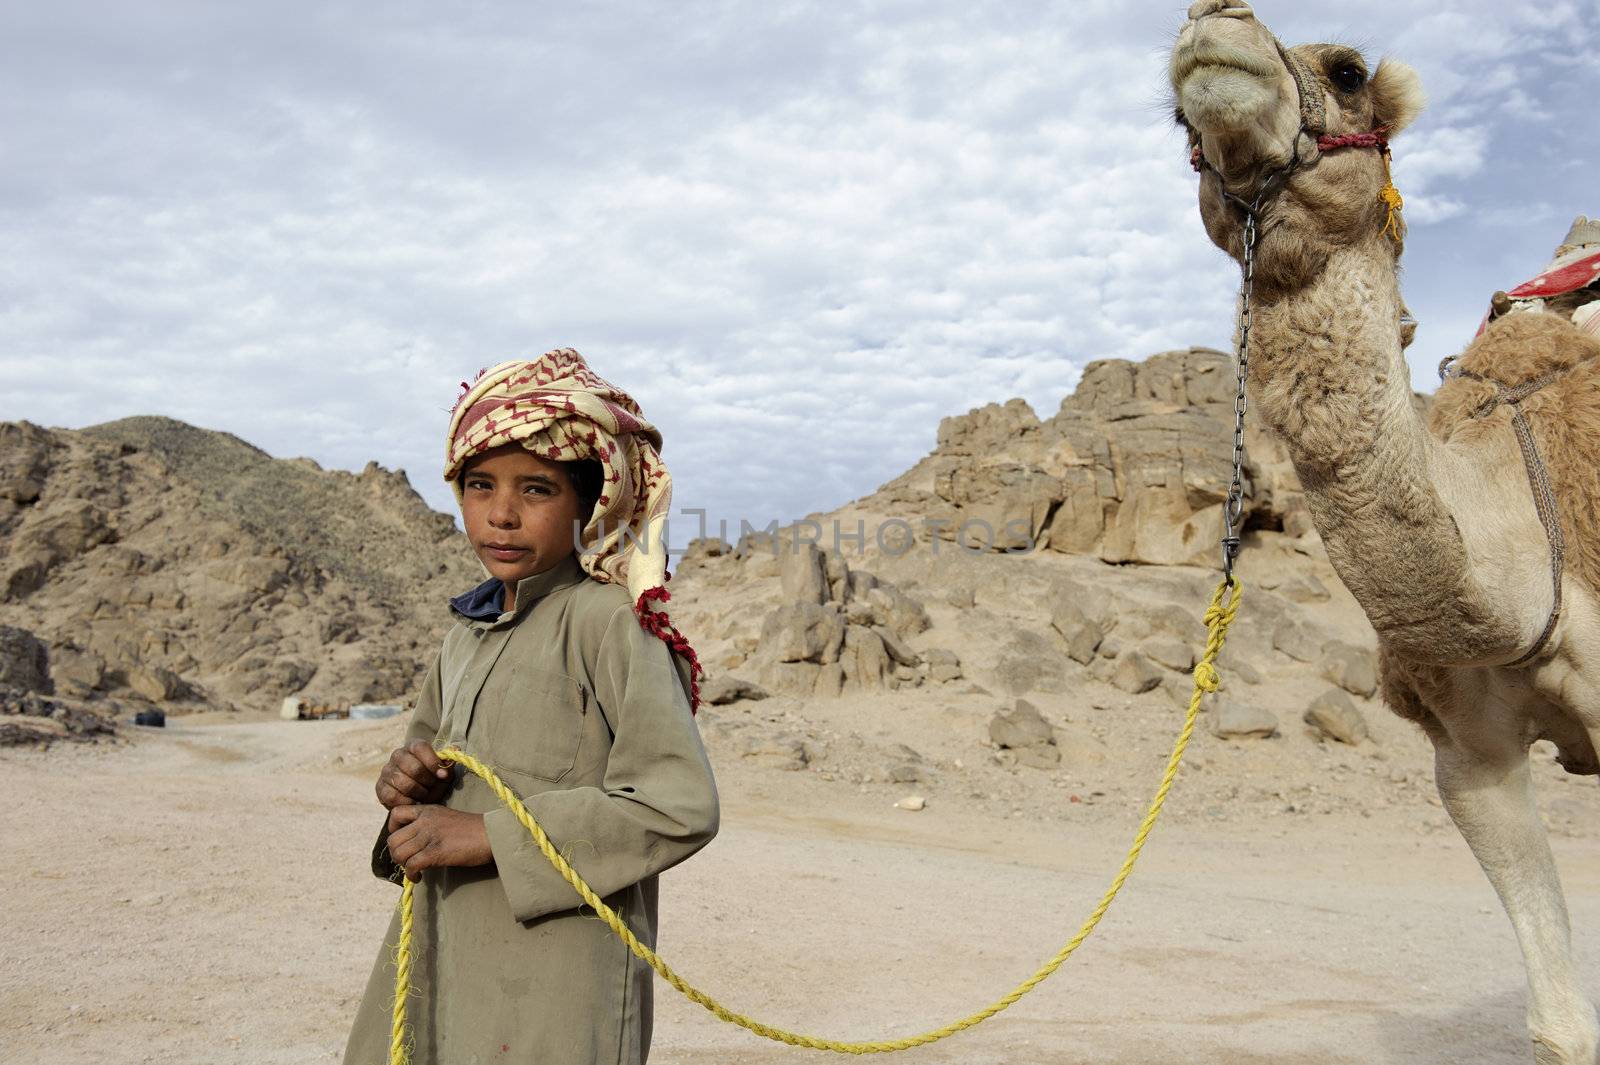 Bedouin boy by jackq